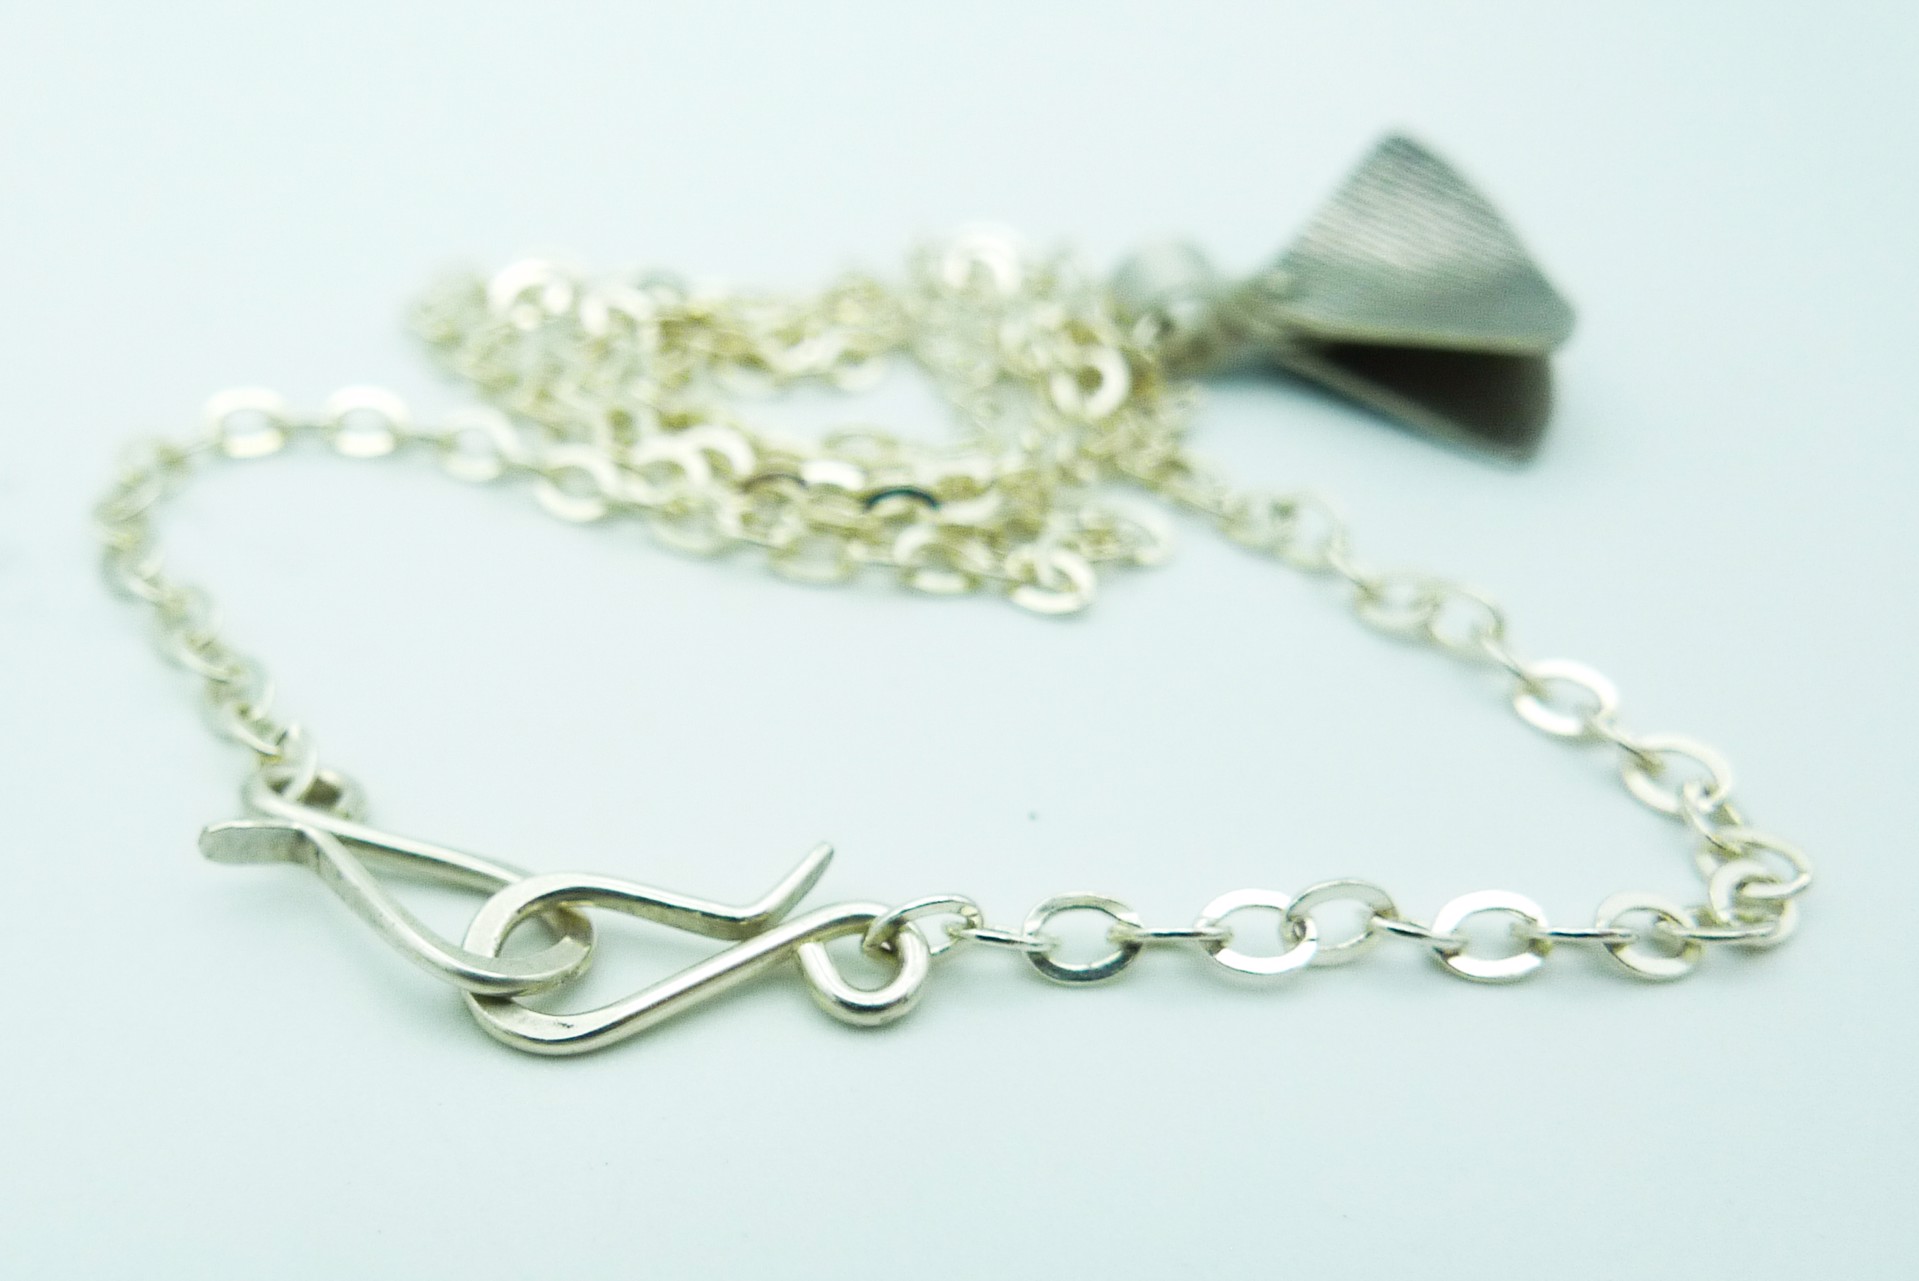 Necklace by Erica Schlueter